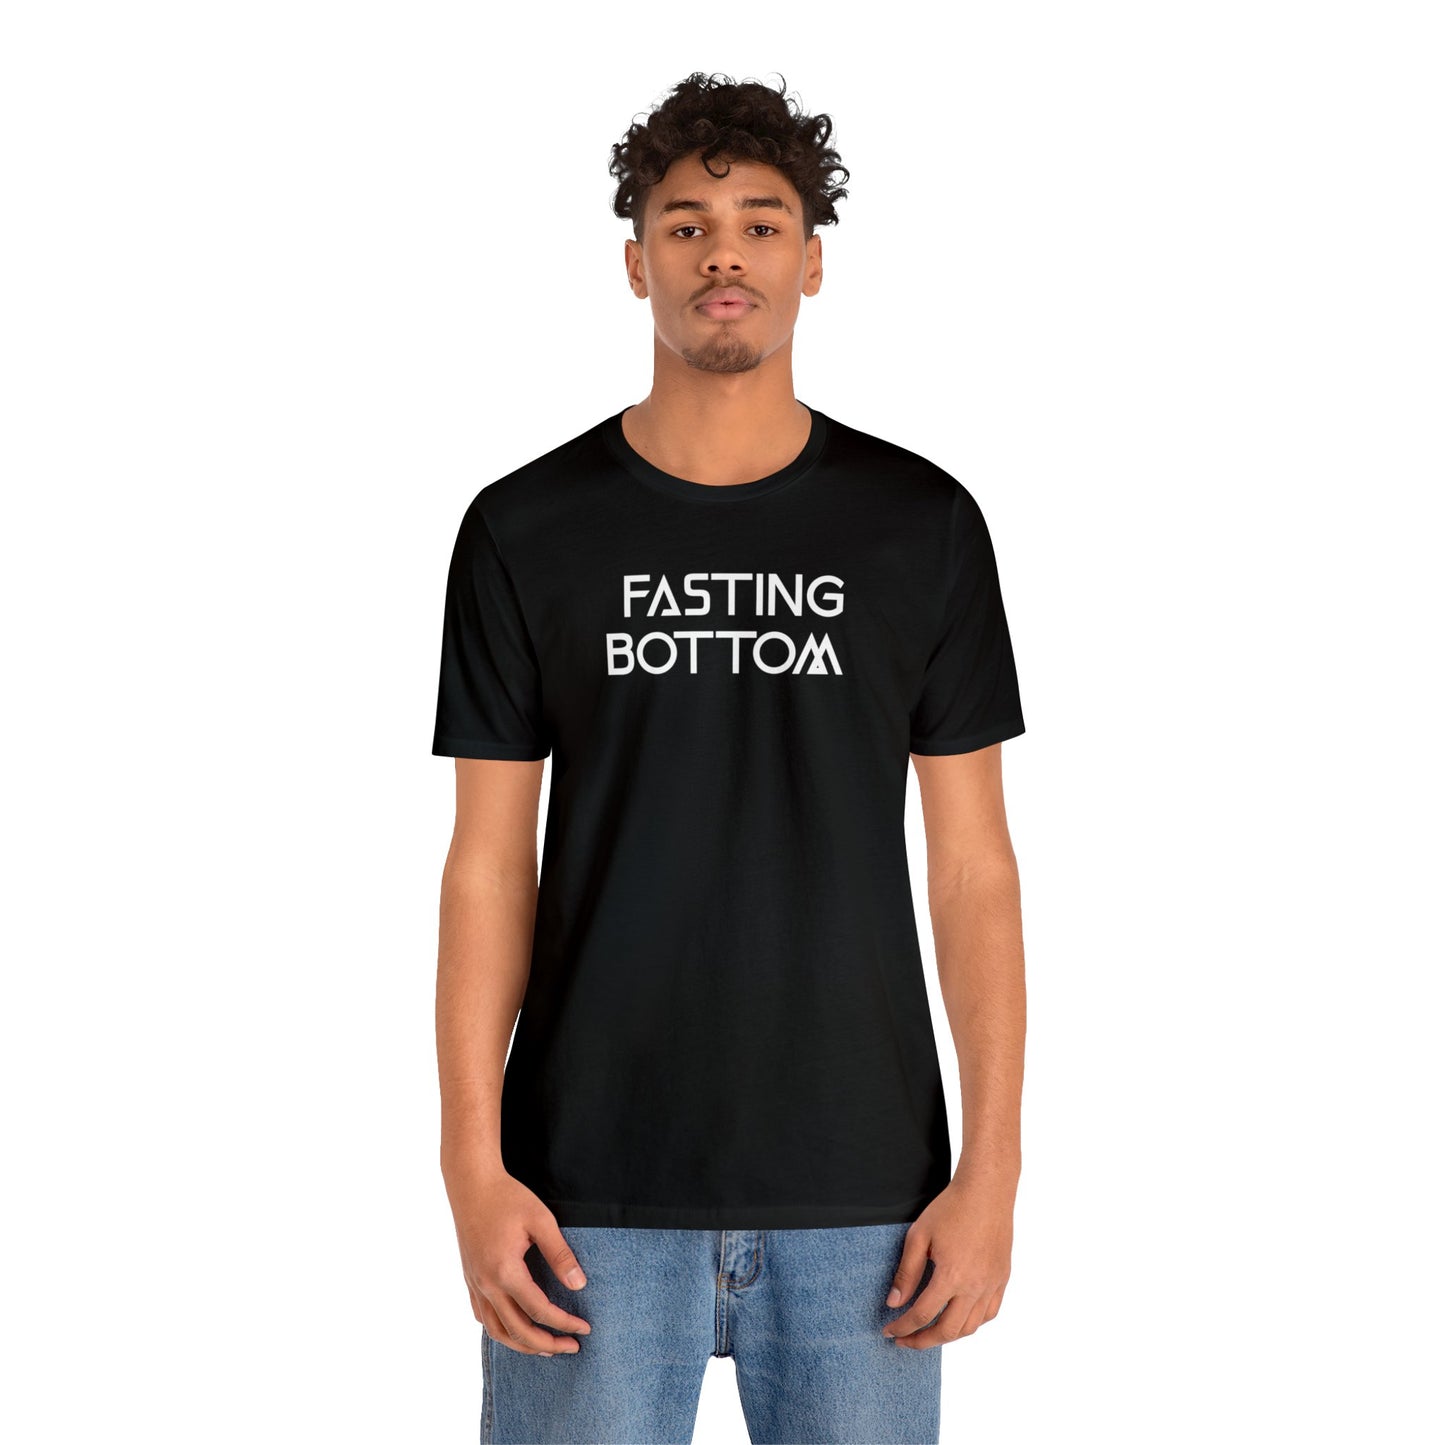 Fasting Bottom